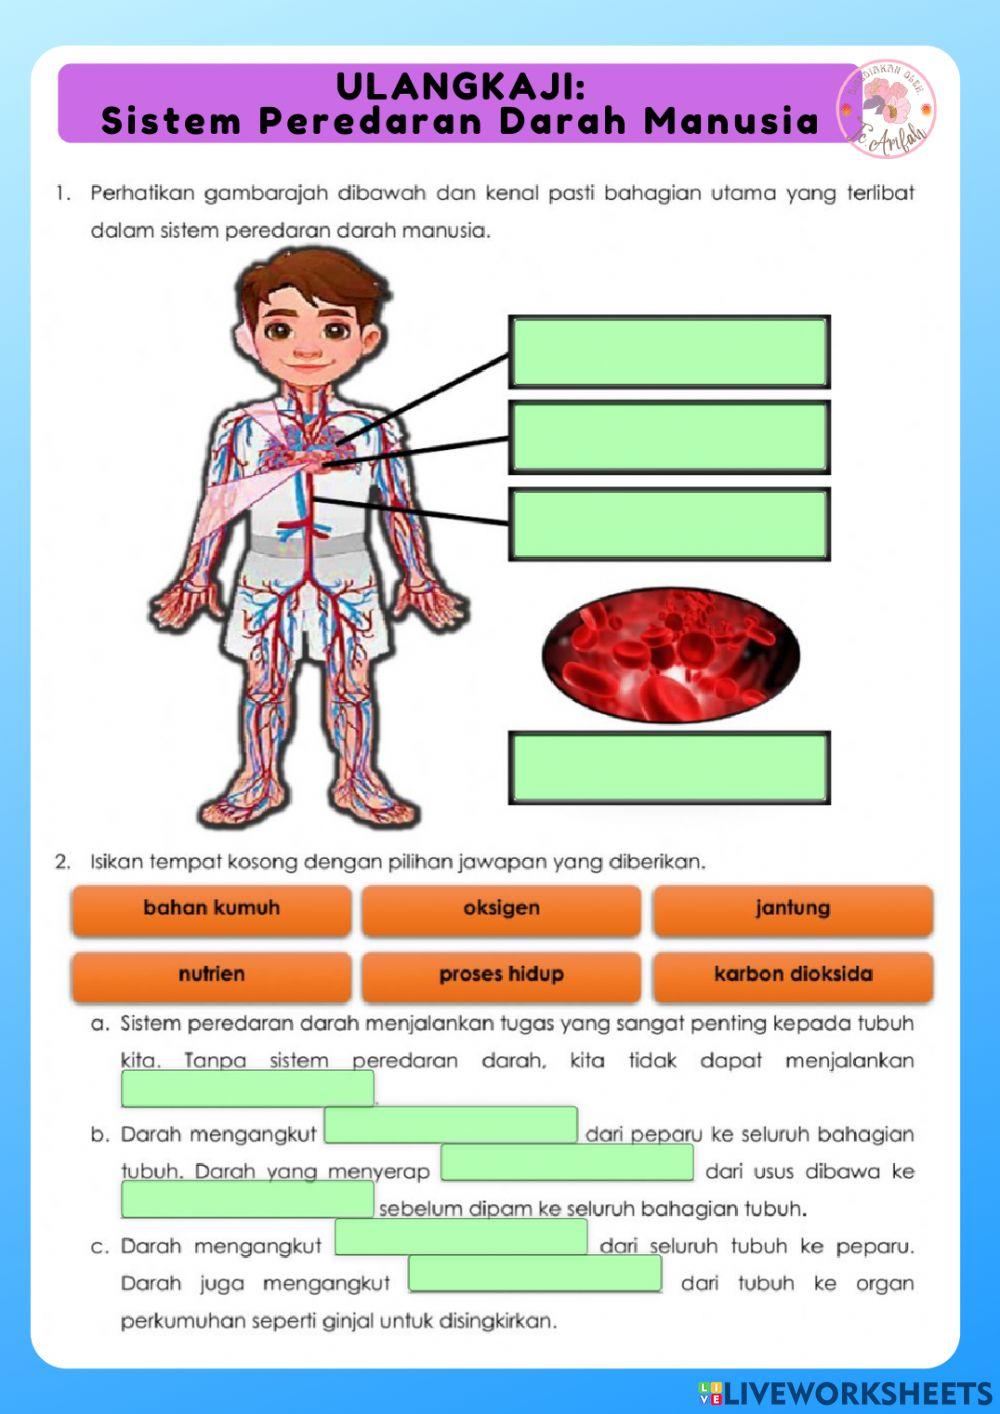 Sains modul 2: sistem peredaran darah